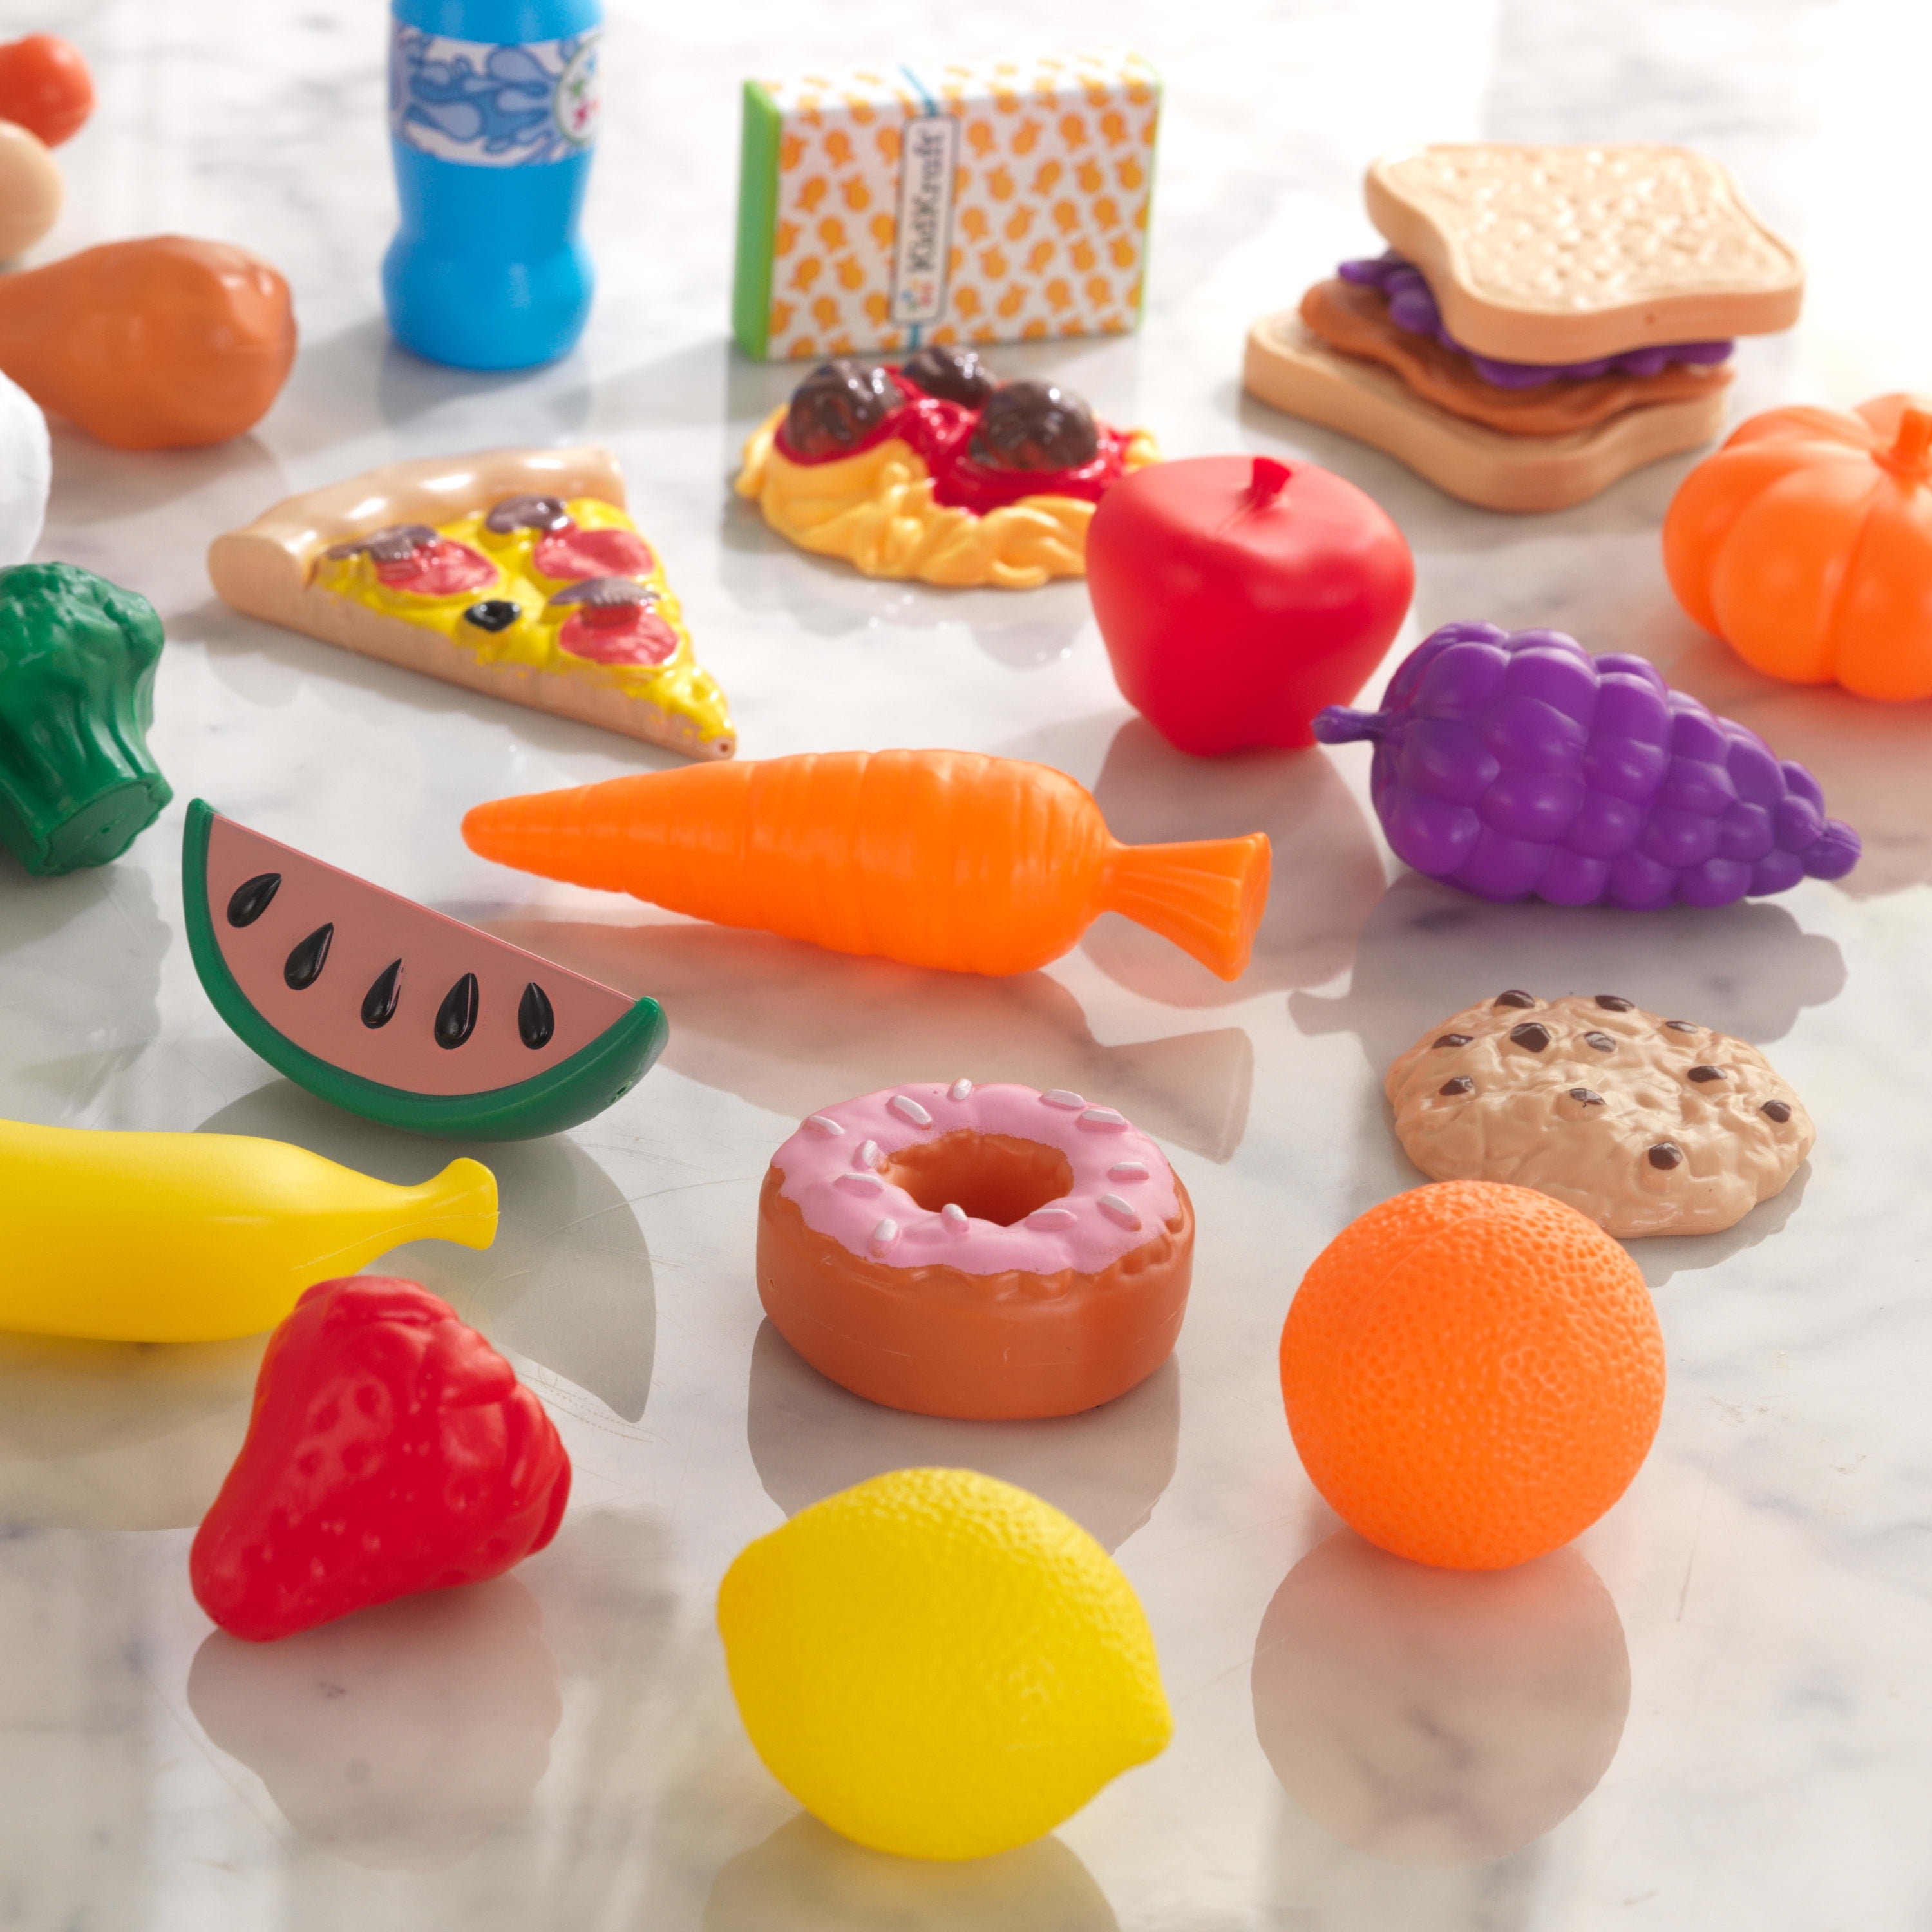 Vegetables & More NEW Snacks KidKraft Tasty Treats Play Food Set Pieces Fruits 